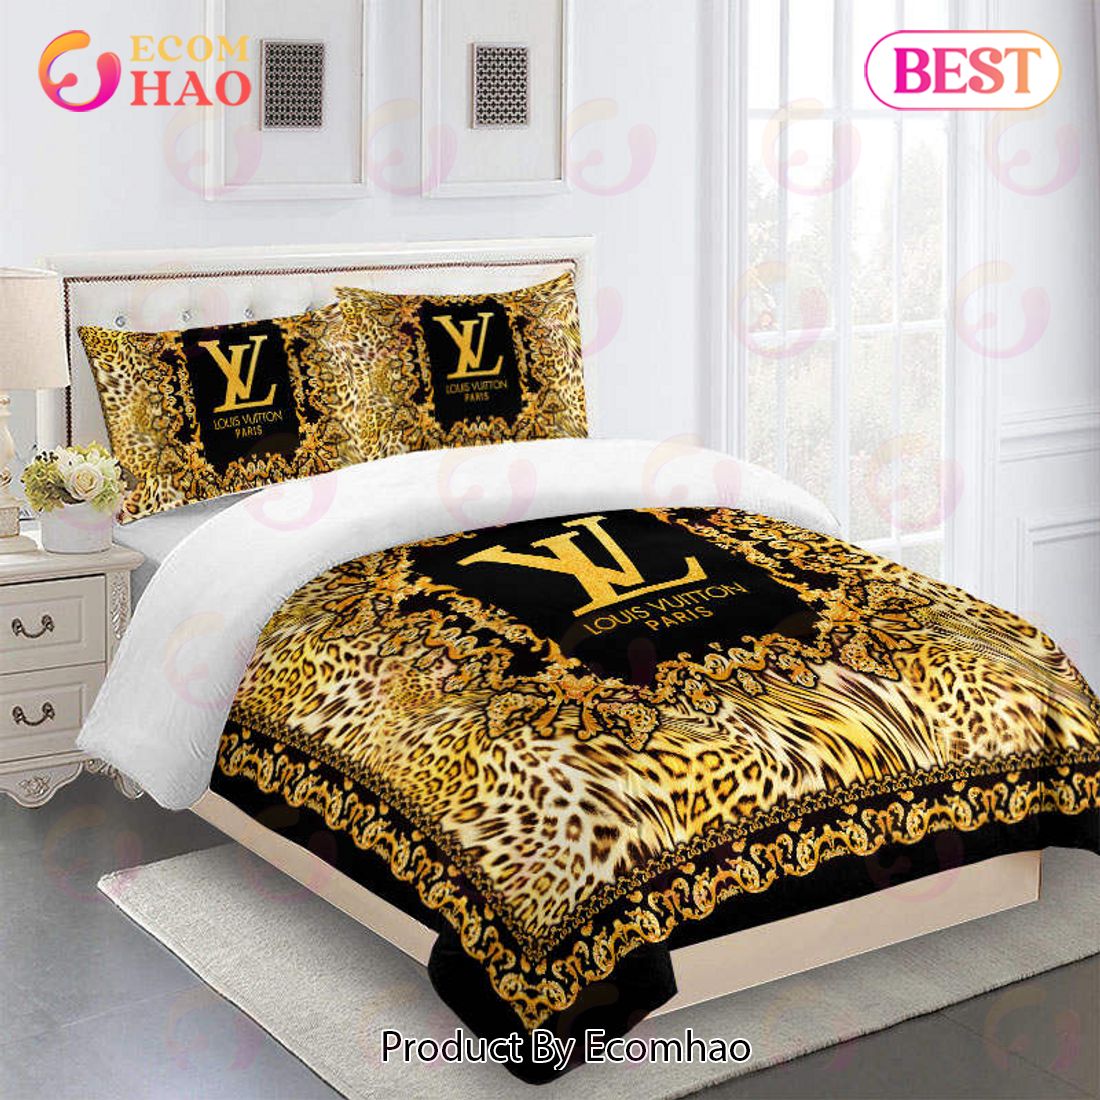 Buy Black Mickey Mouse Louis Vuitton Bedding Sets Bed Sets, Bedroom Sets,  Comforter Sets, Duvet Cover